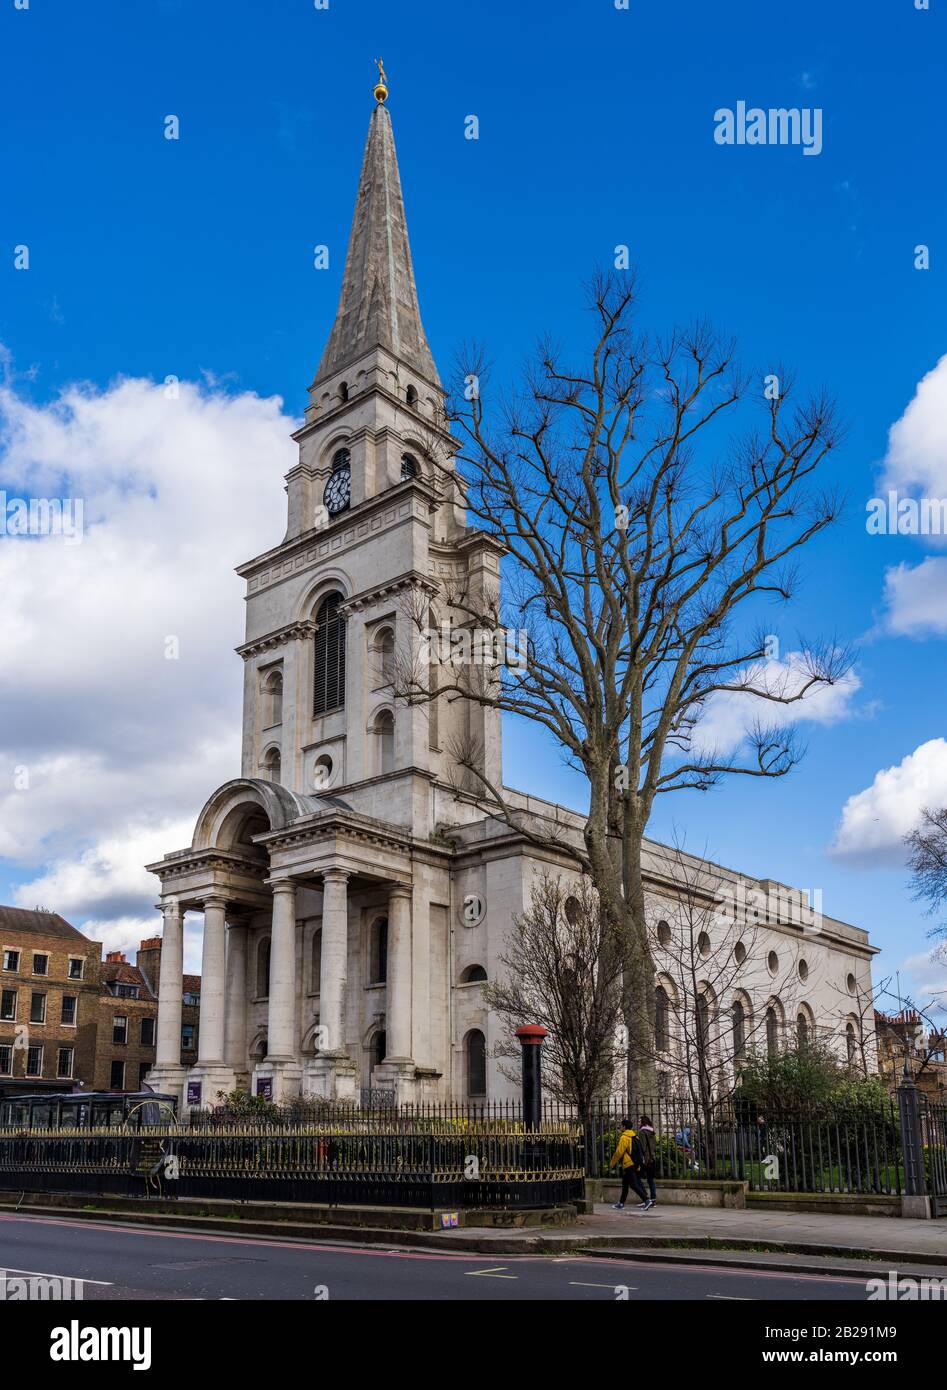 Christ Church Spitalfields in East London. Anglican church built between 1714 and 1729. Architect Nicholas Hawksmoor. Stock Photo